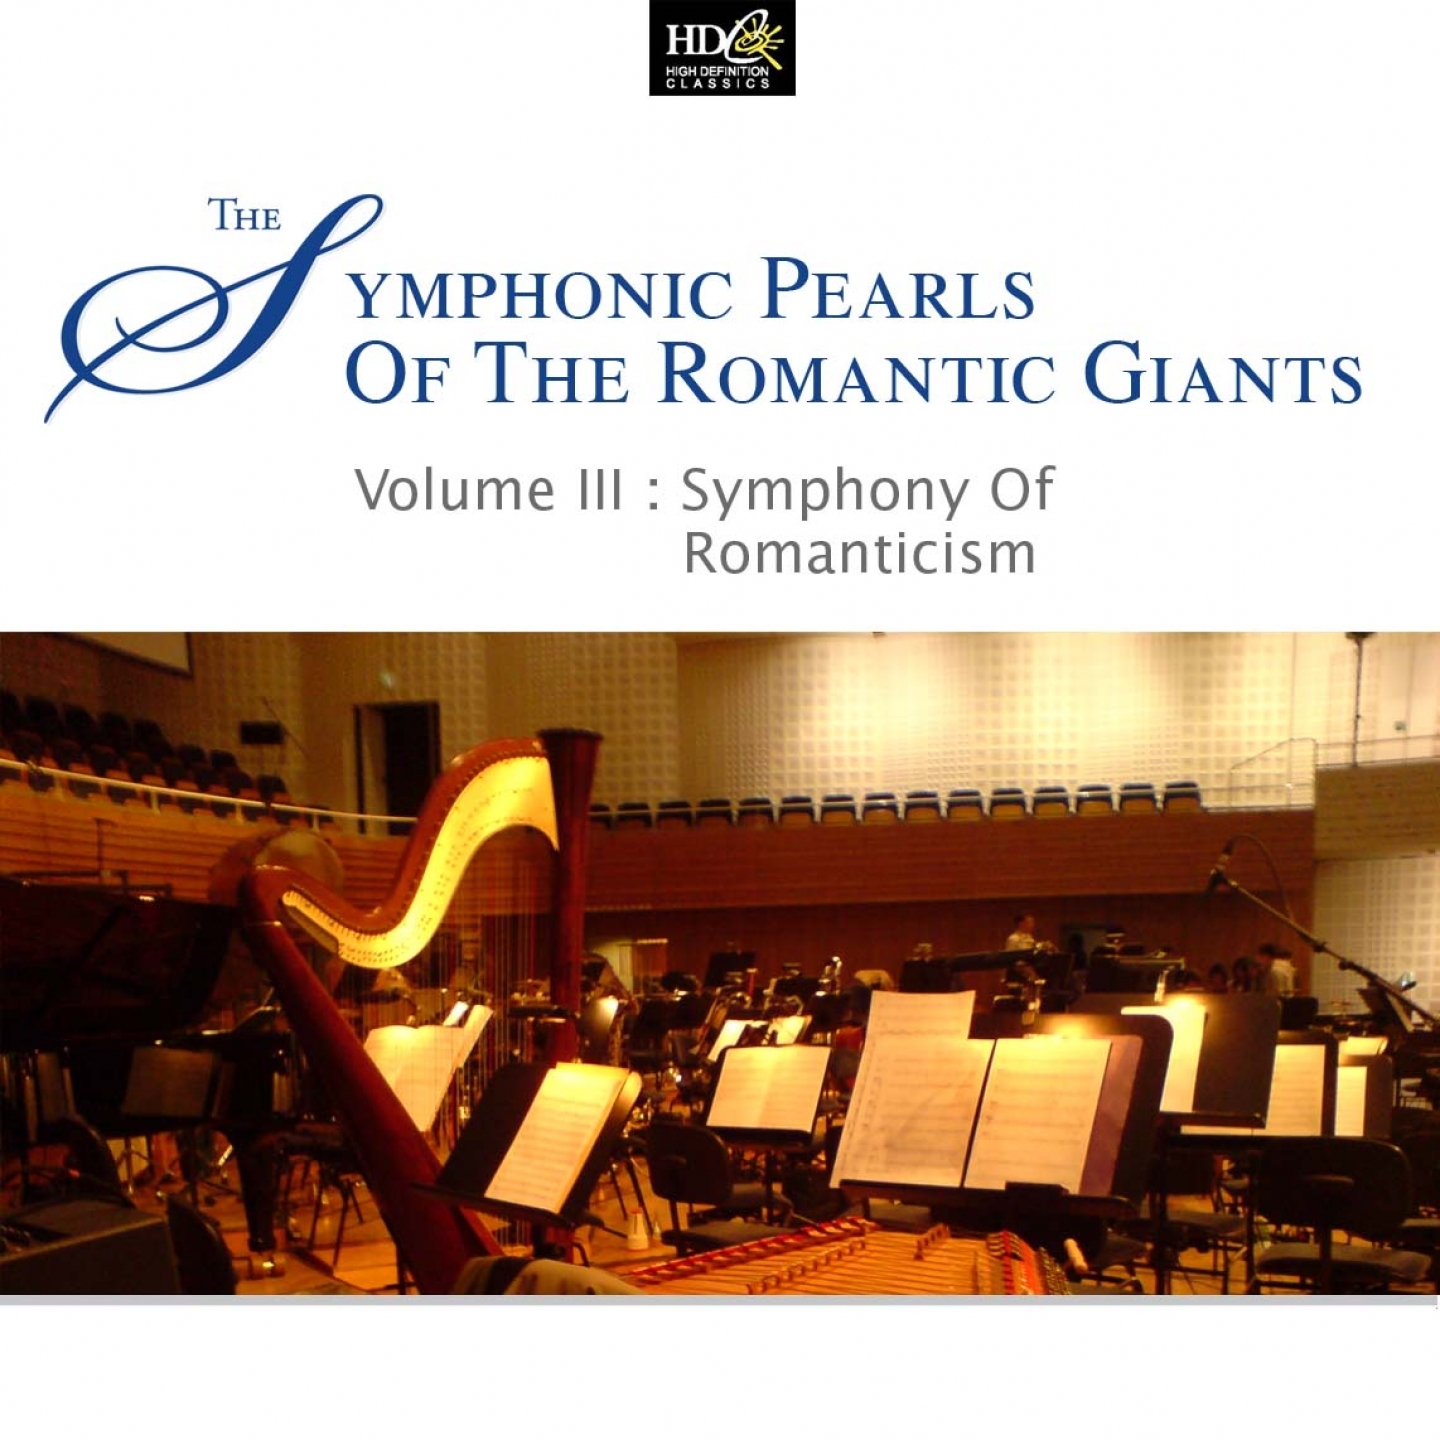 Symphonic Pearls Of Romantic Giants Vol. 3 - Symphony Of Romanticism